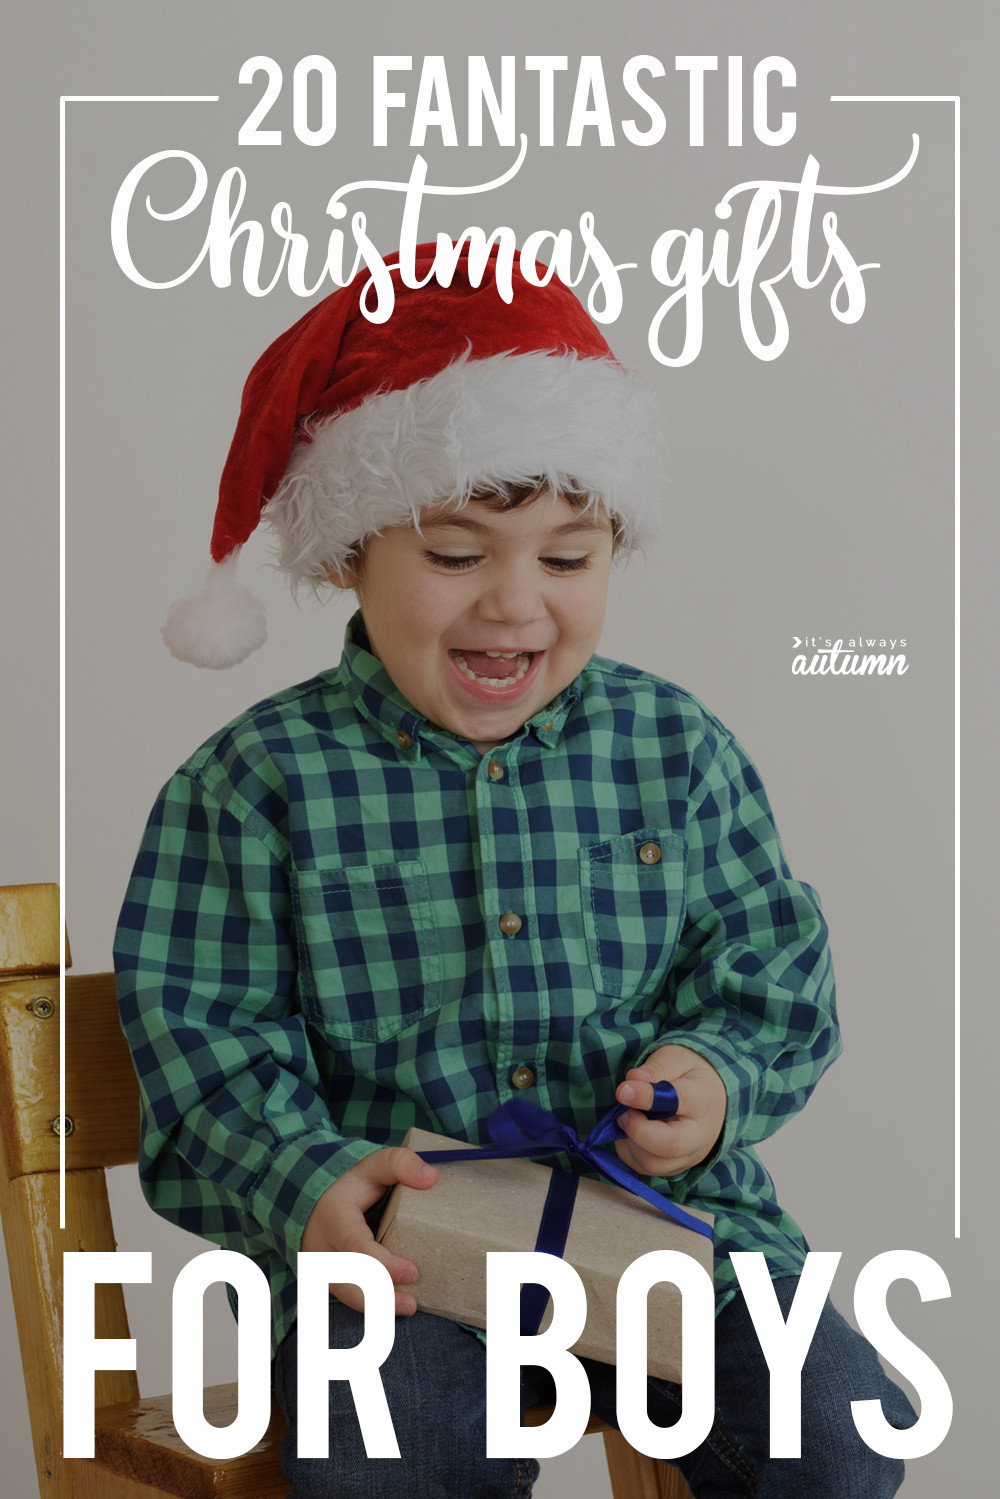 Best Gift Ideas For Boys
 The 20 BEST Christmas ts for boys It s Always Autumn